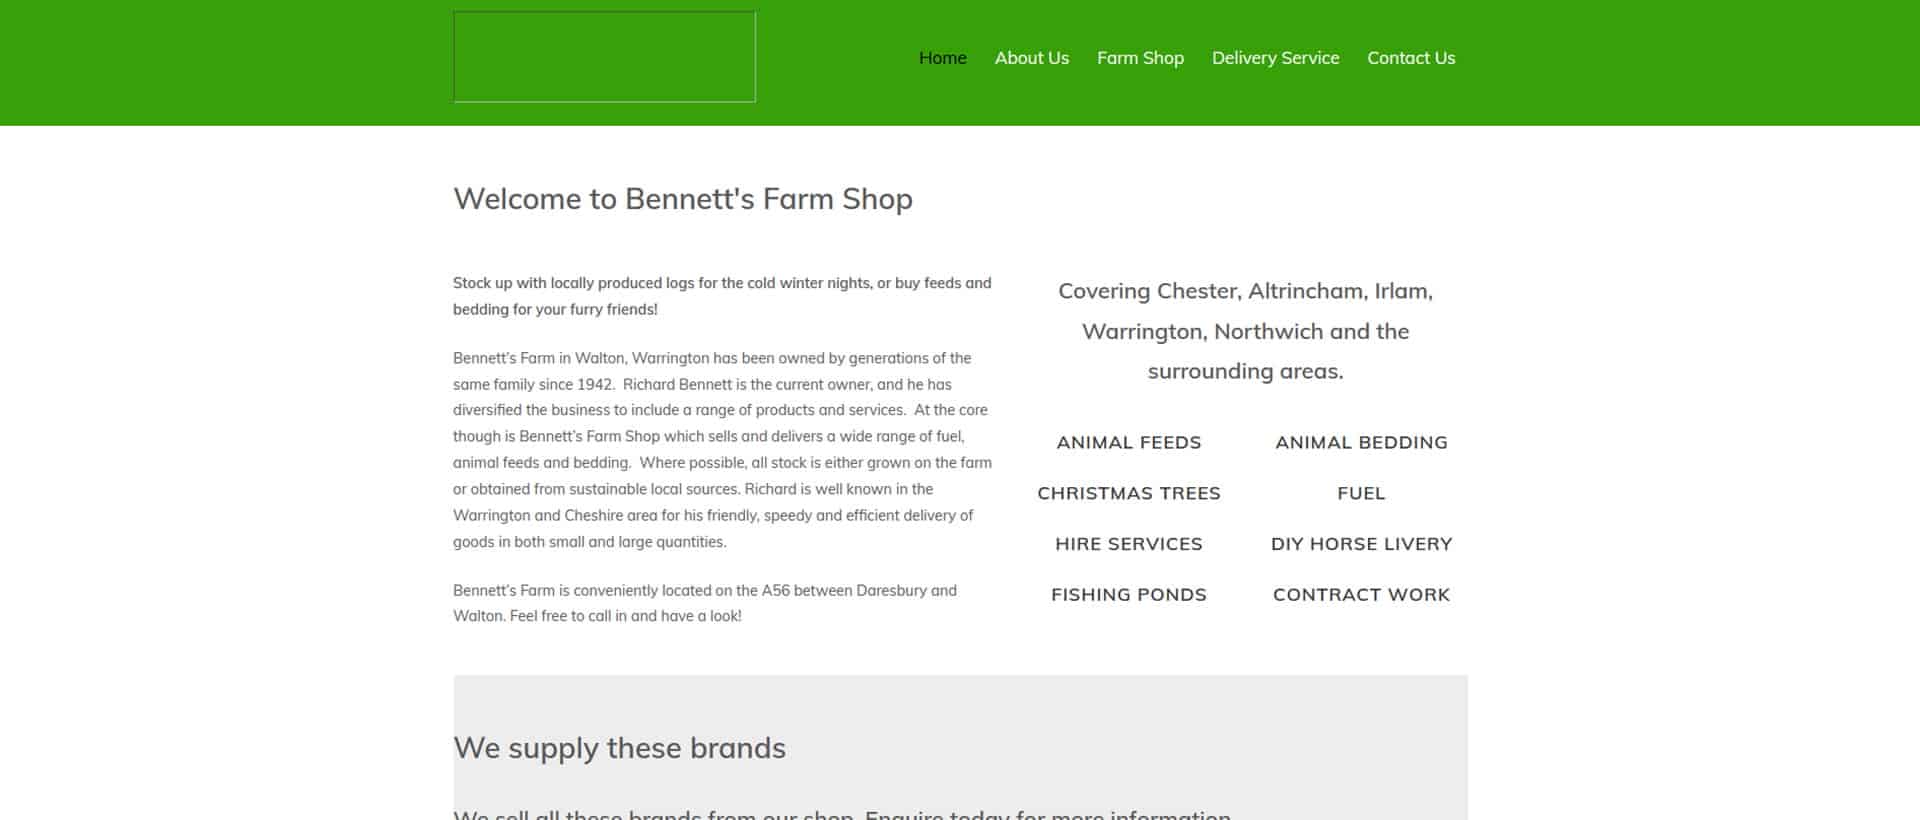 BWS_Bennett’s Farm Shop-Before